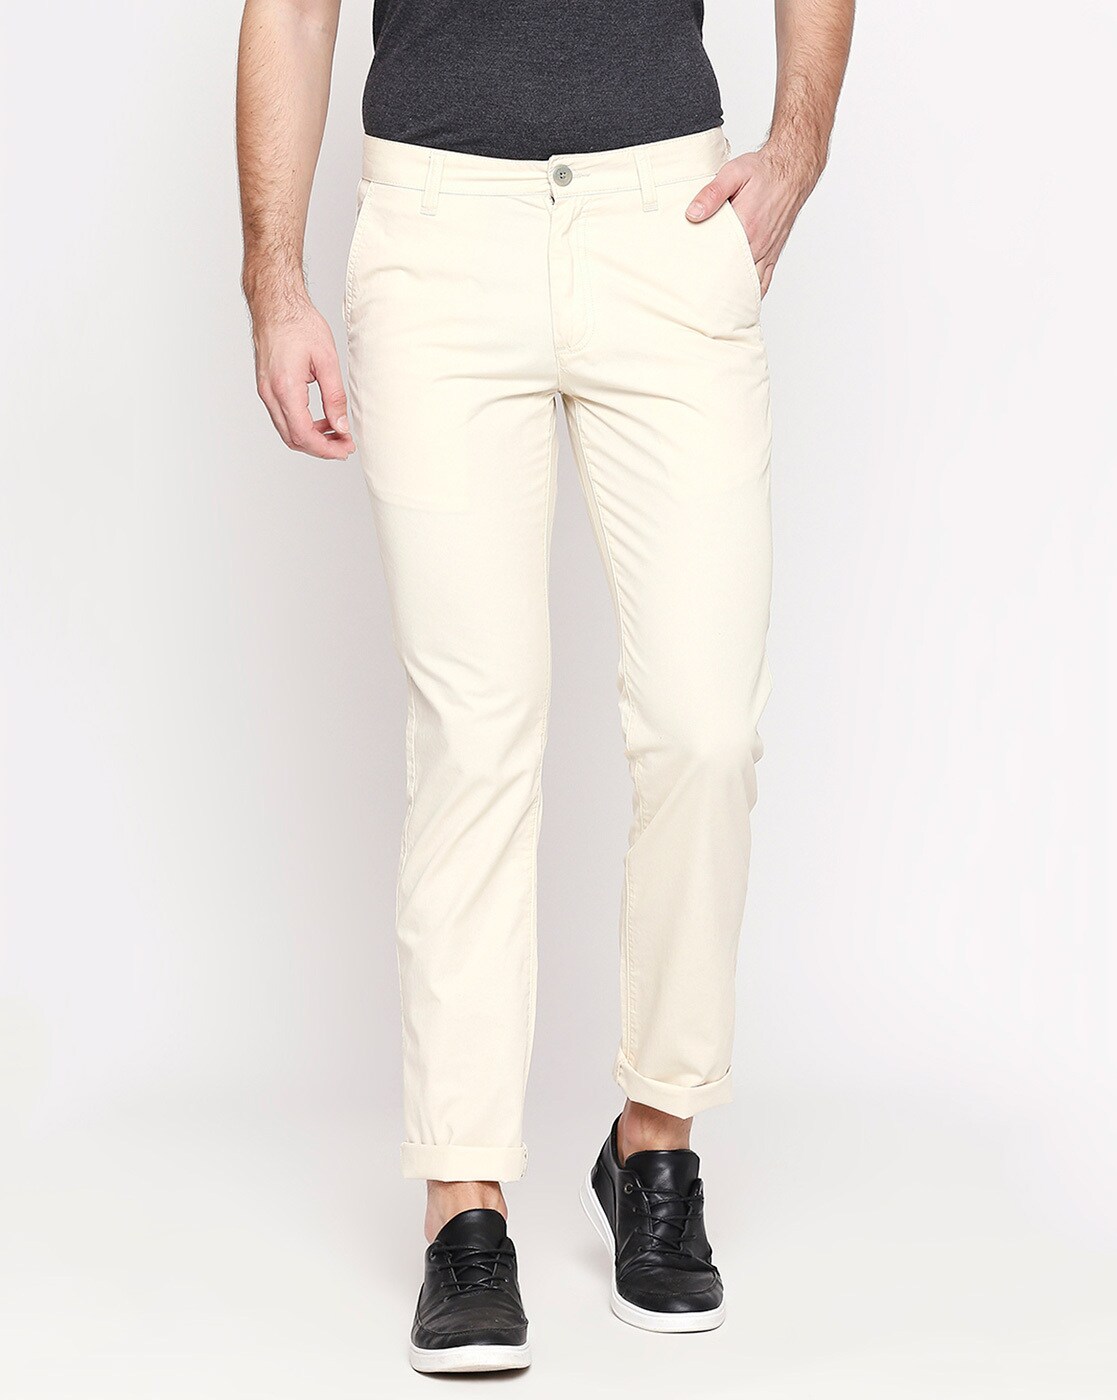 Buy Urban Ranger By Pantaloons Men Slim Fit Trousers - Trousers for Men  25241928 | Myntra